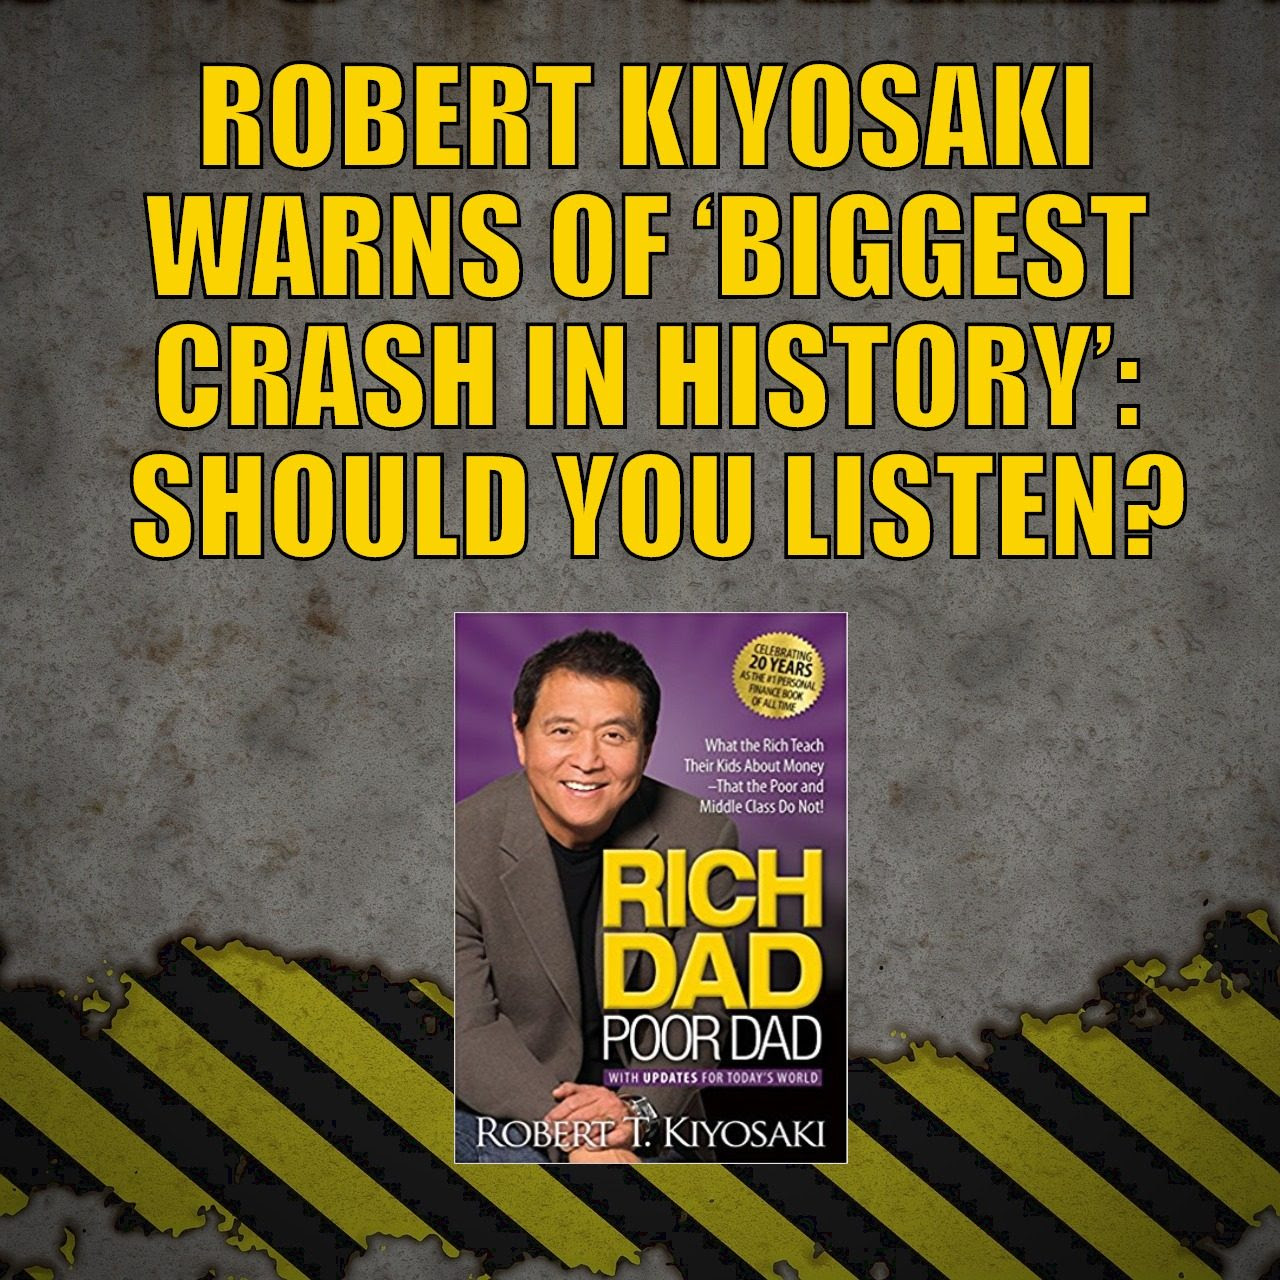 Rich Dad Poor Dad Author Robert Kiyosaki Warns Australia of ‘Biggest Crash in History’: Should You Listen?